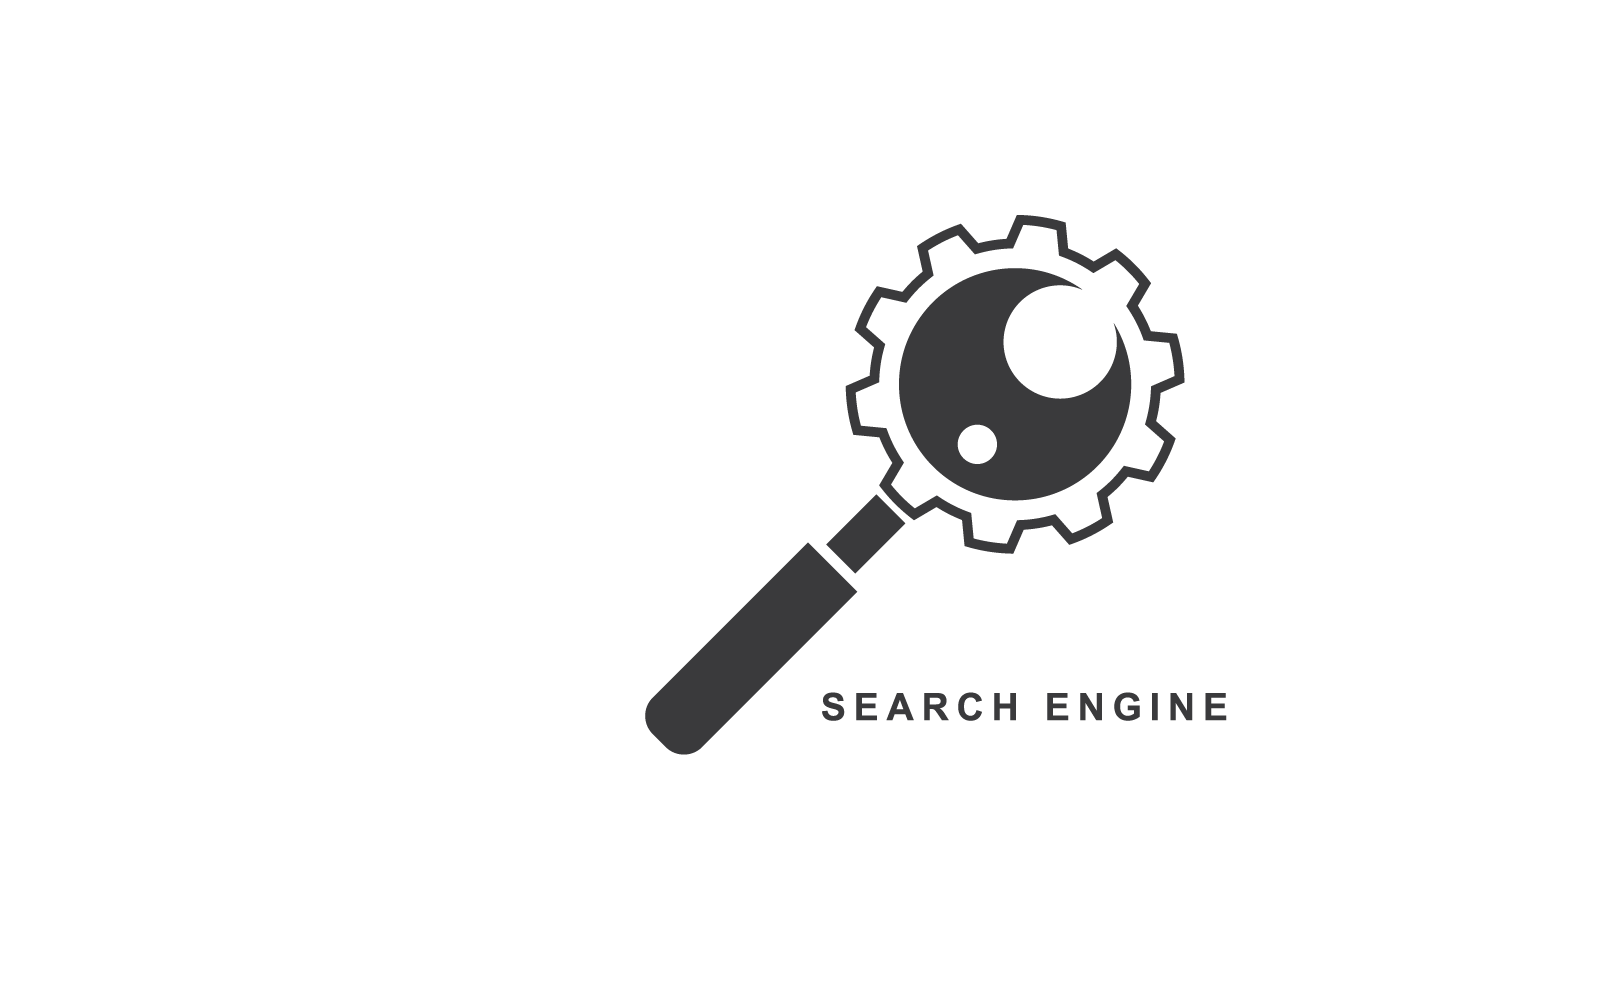 Search engine logo vector flat design